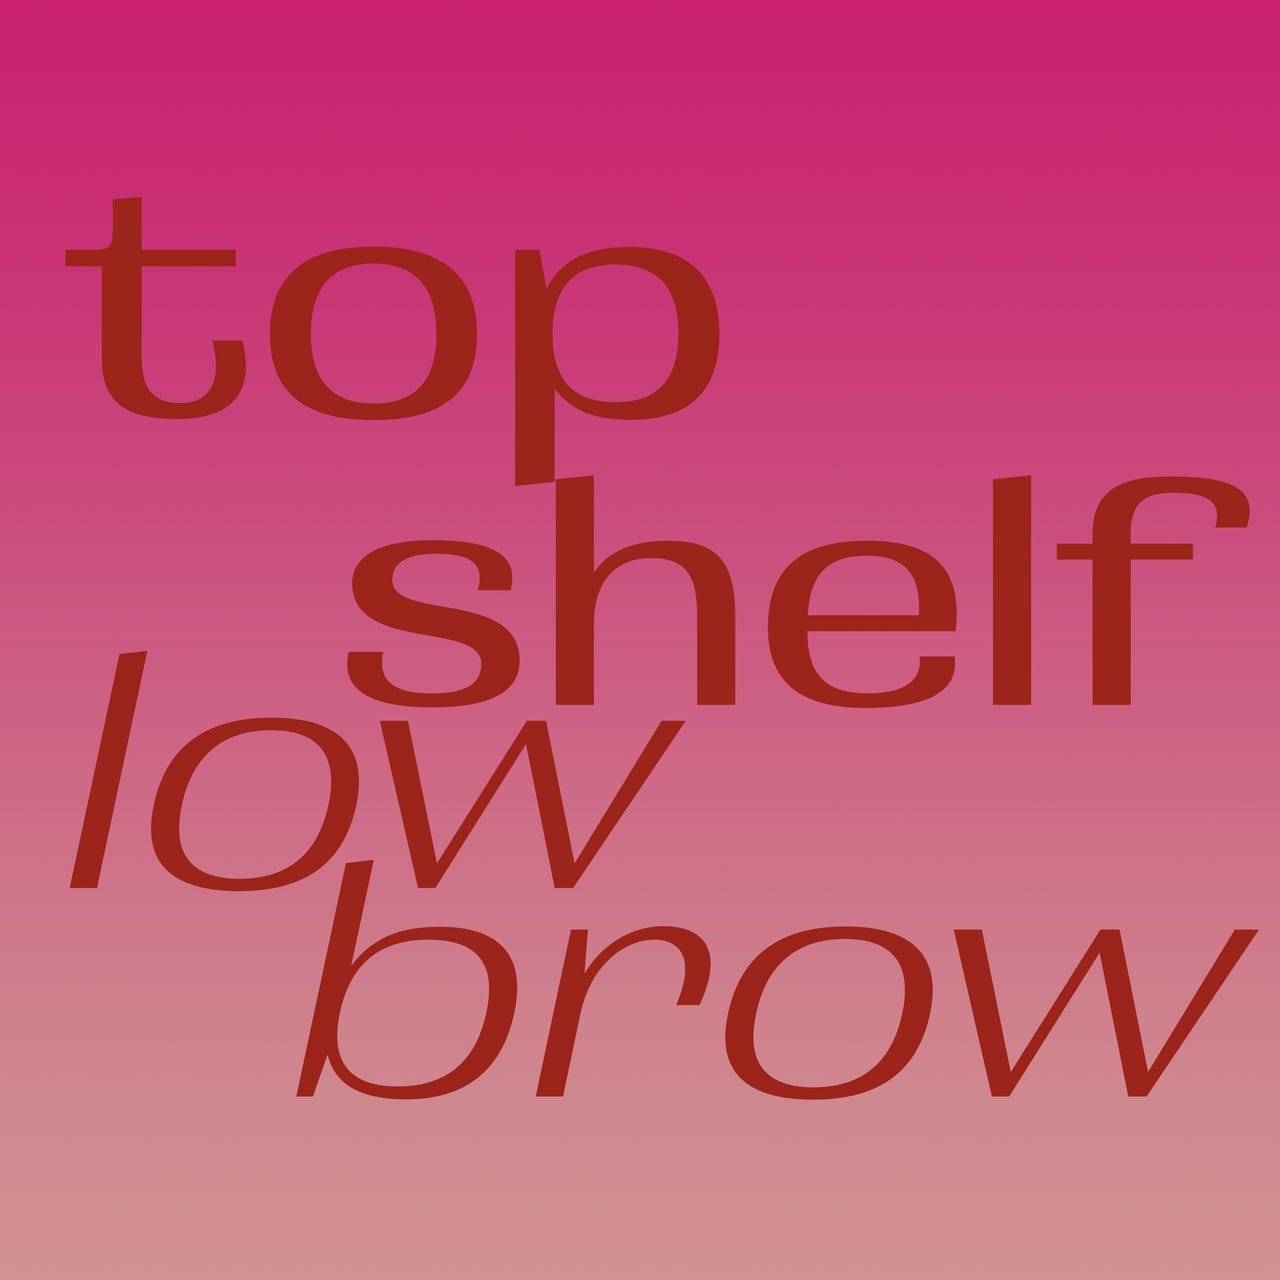 Top Shelf, Low Brow